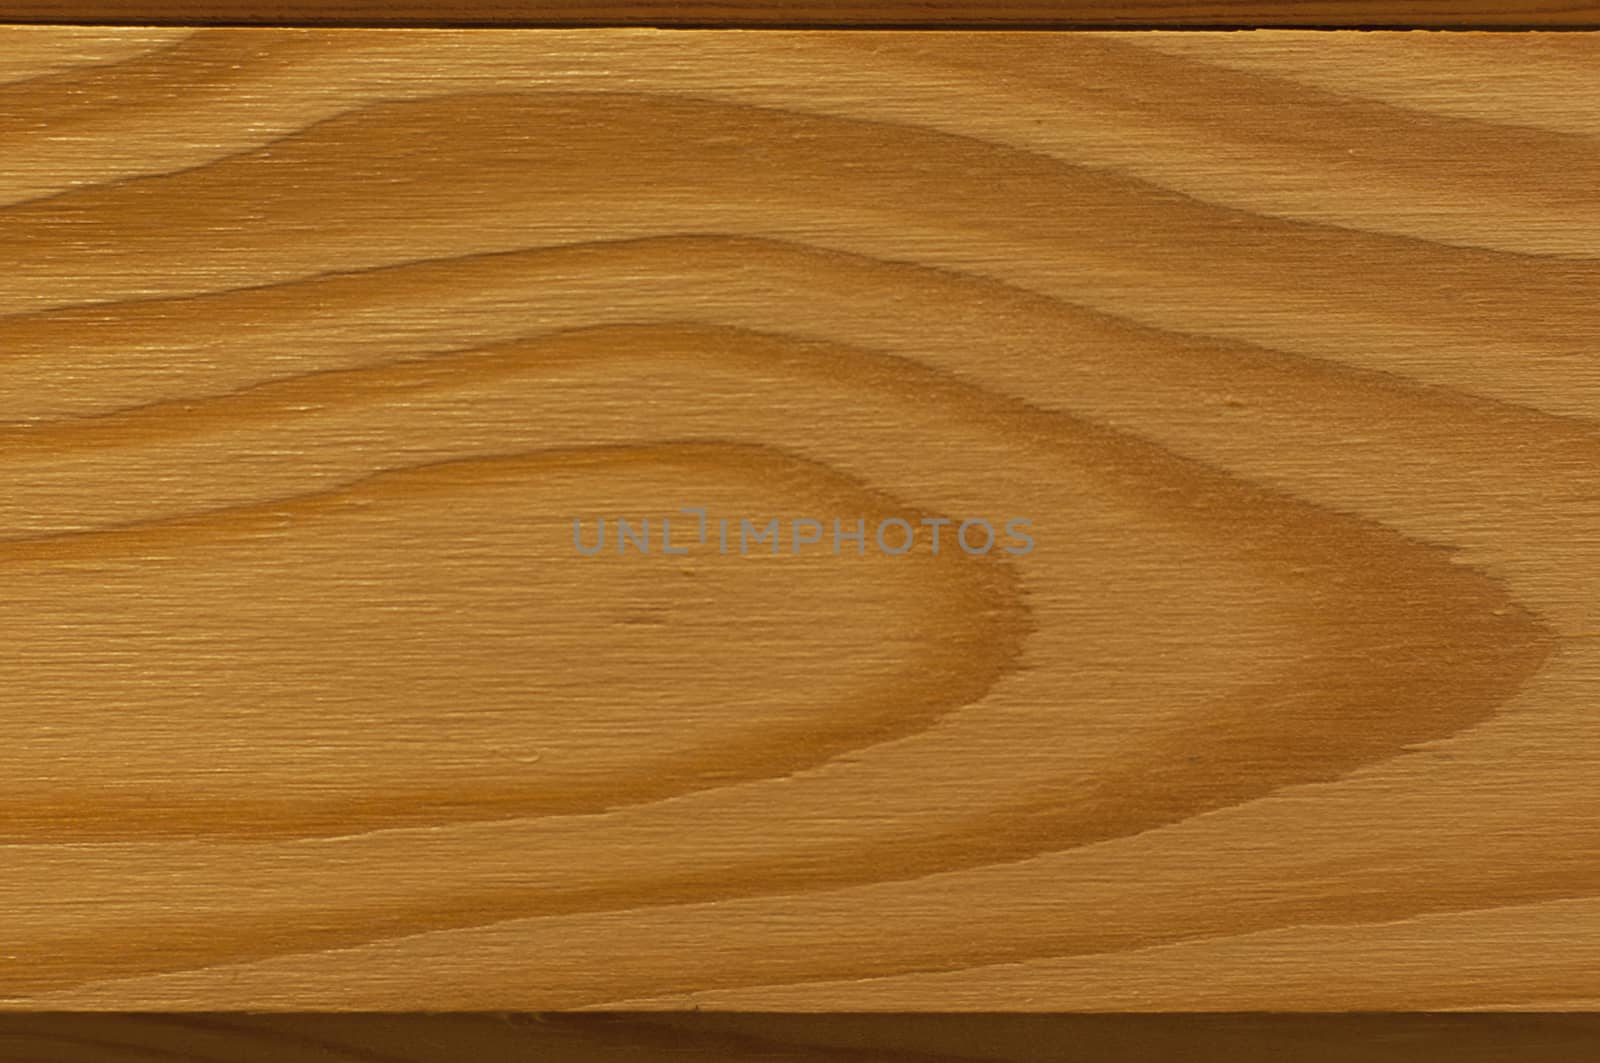 Wood texture. Wood panel. Background. Tree lines.